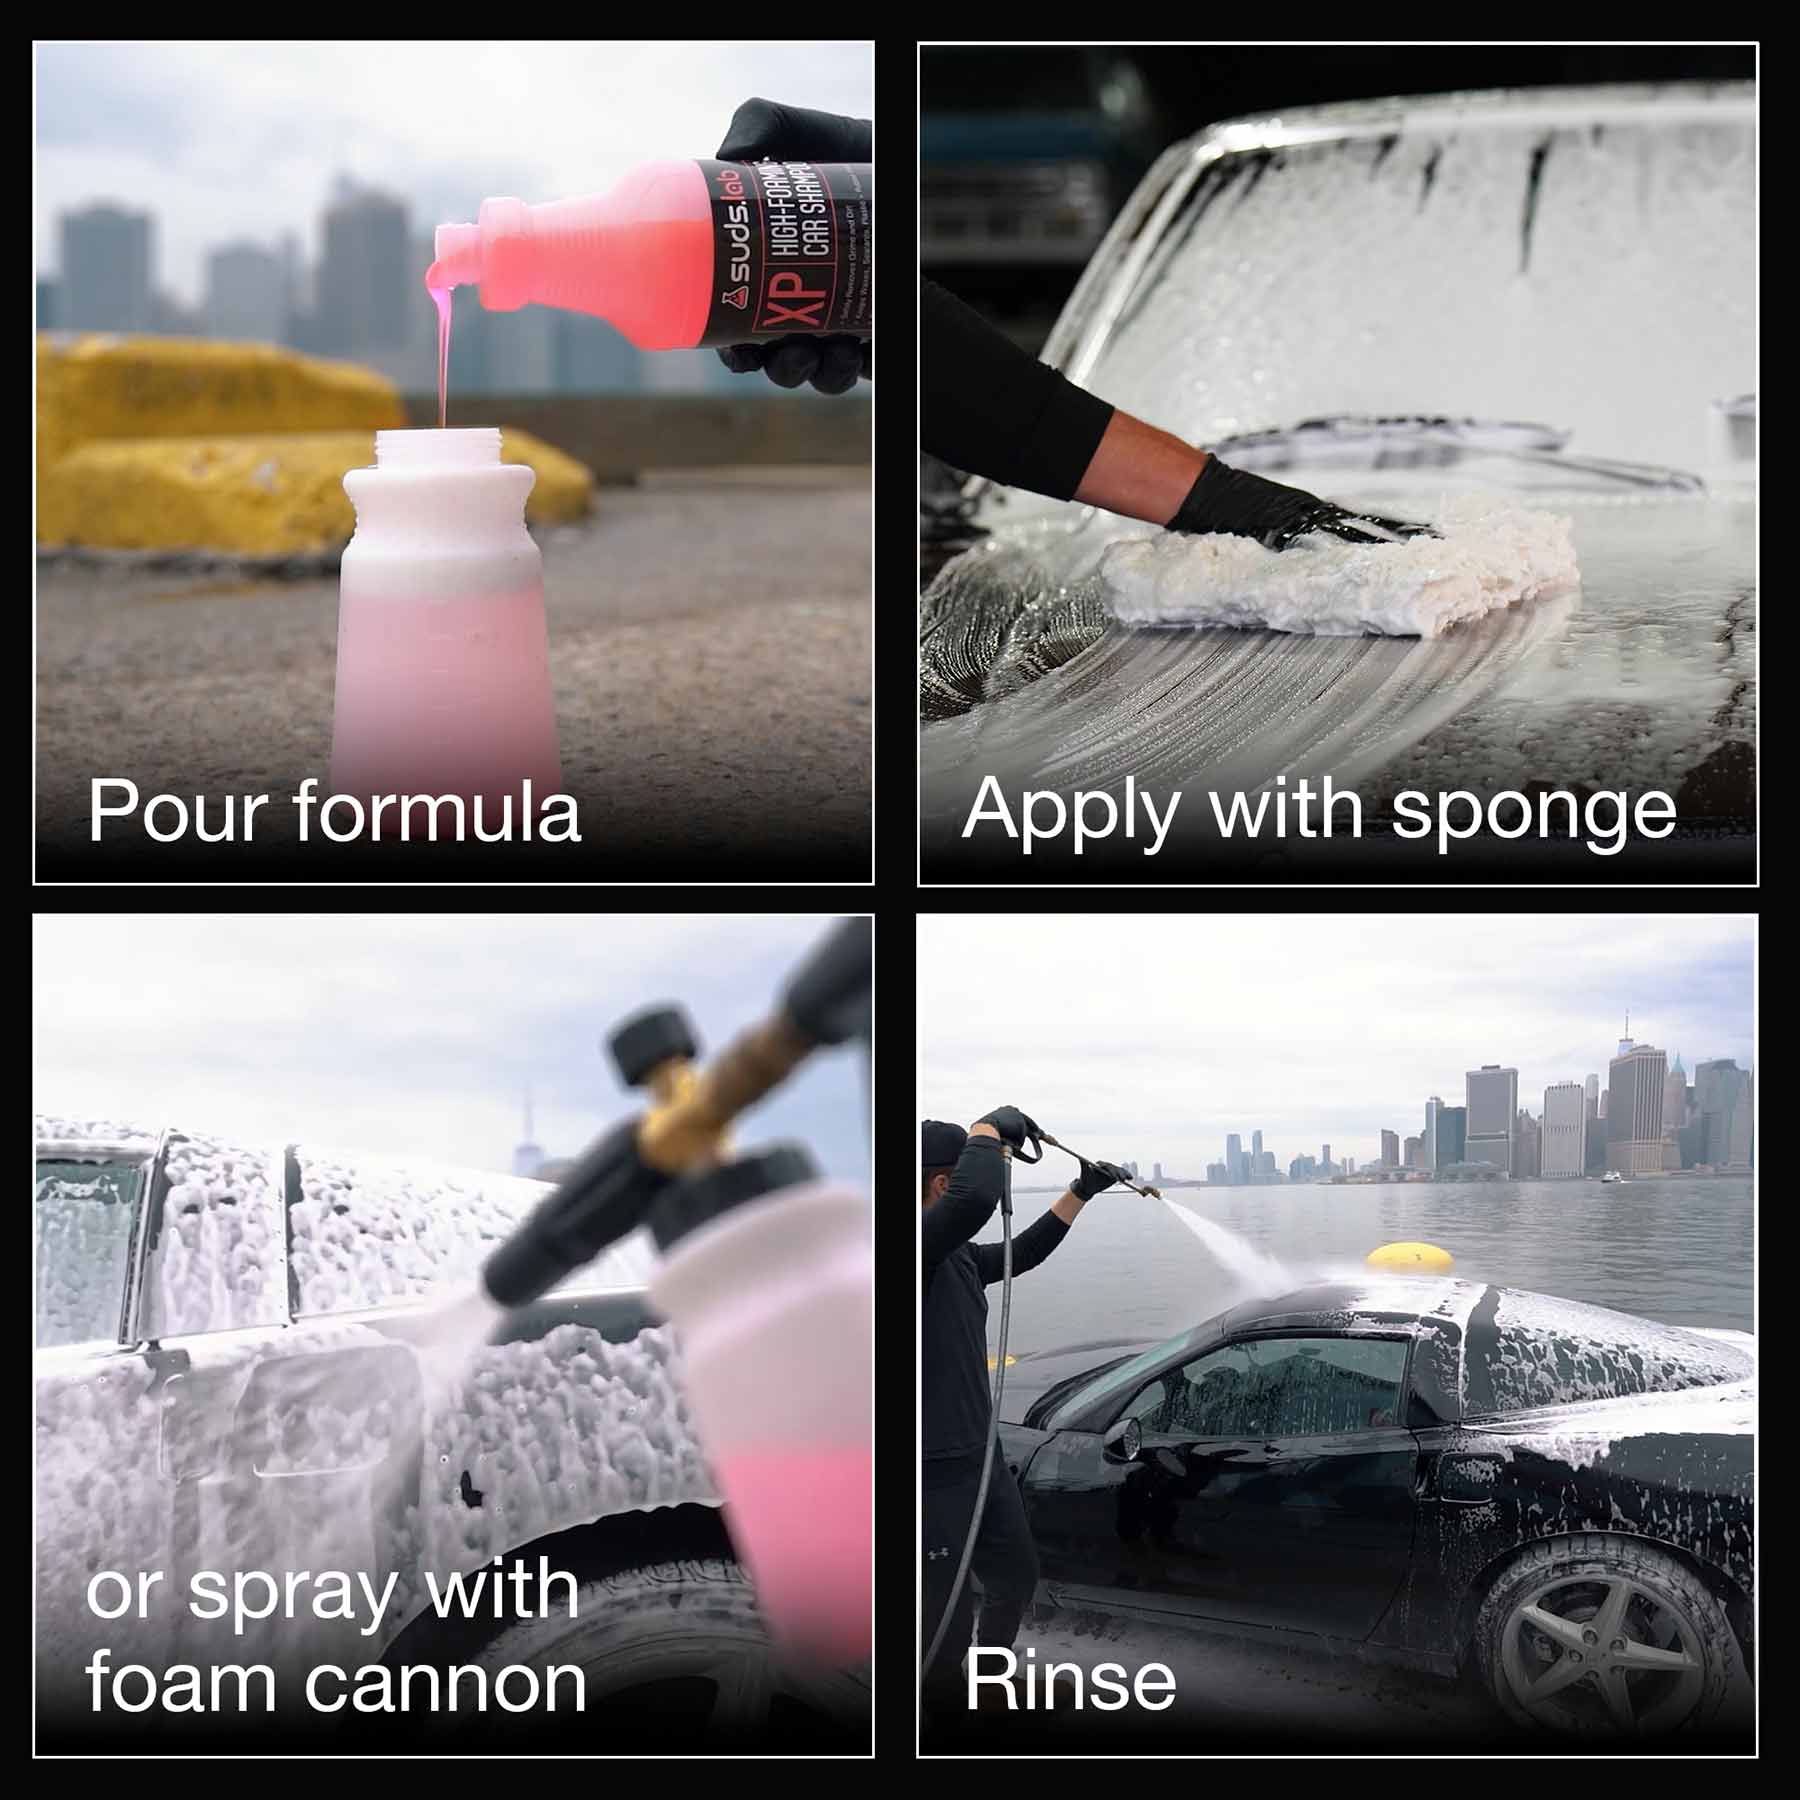 XP High-Foaming Car Shampoo – SudsLab